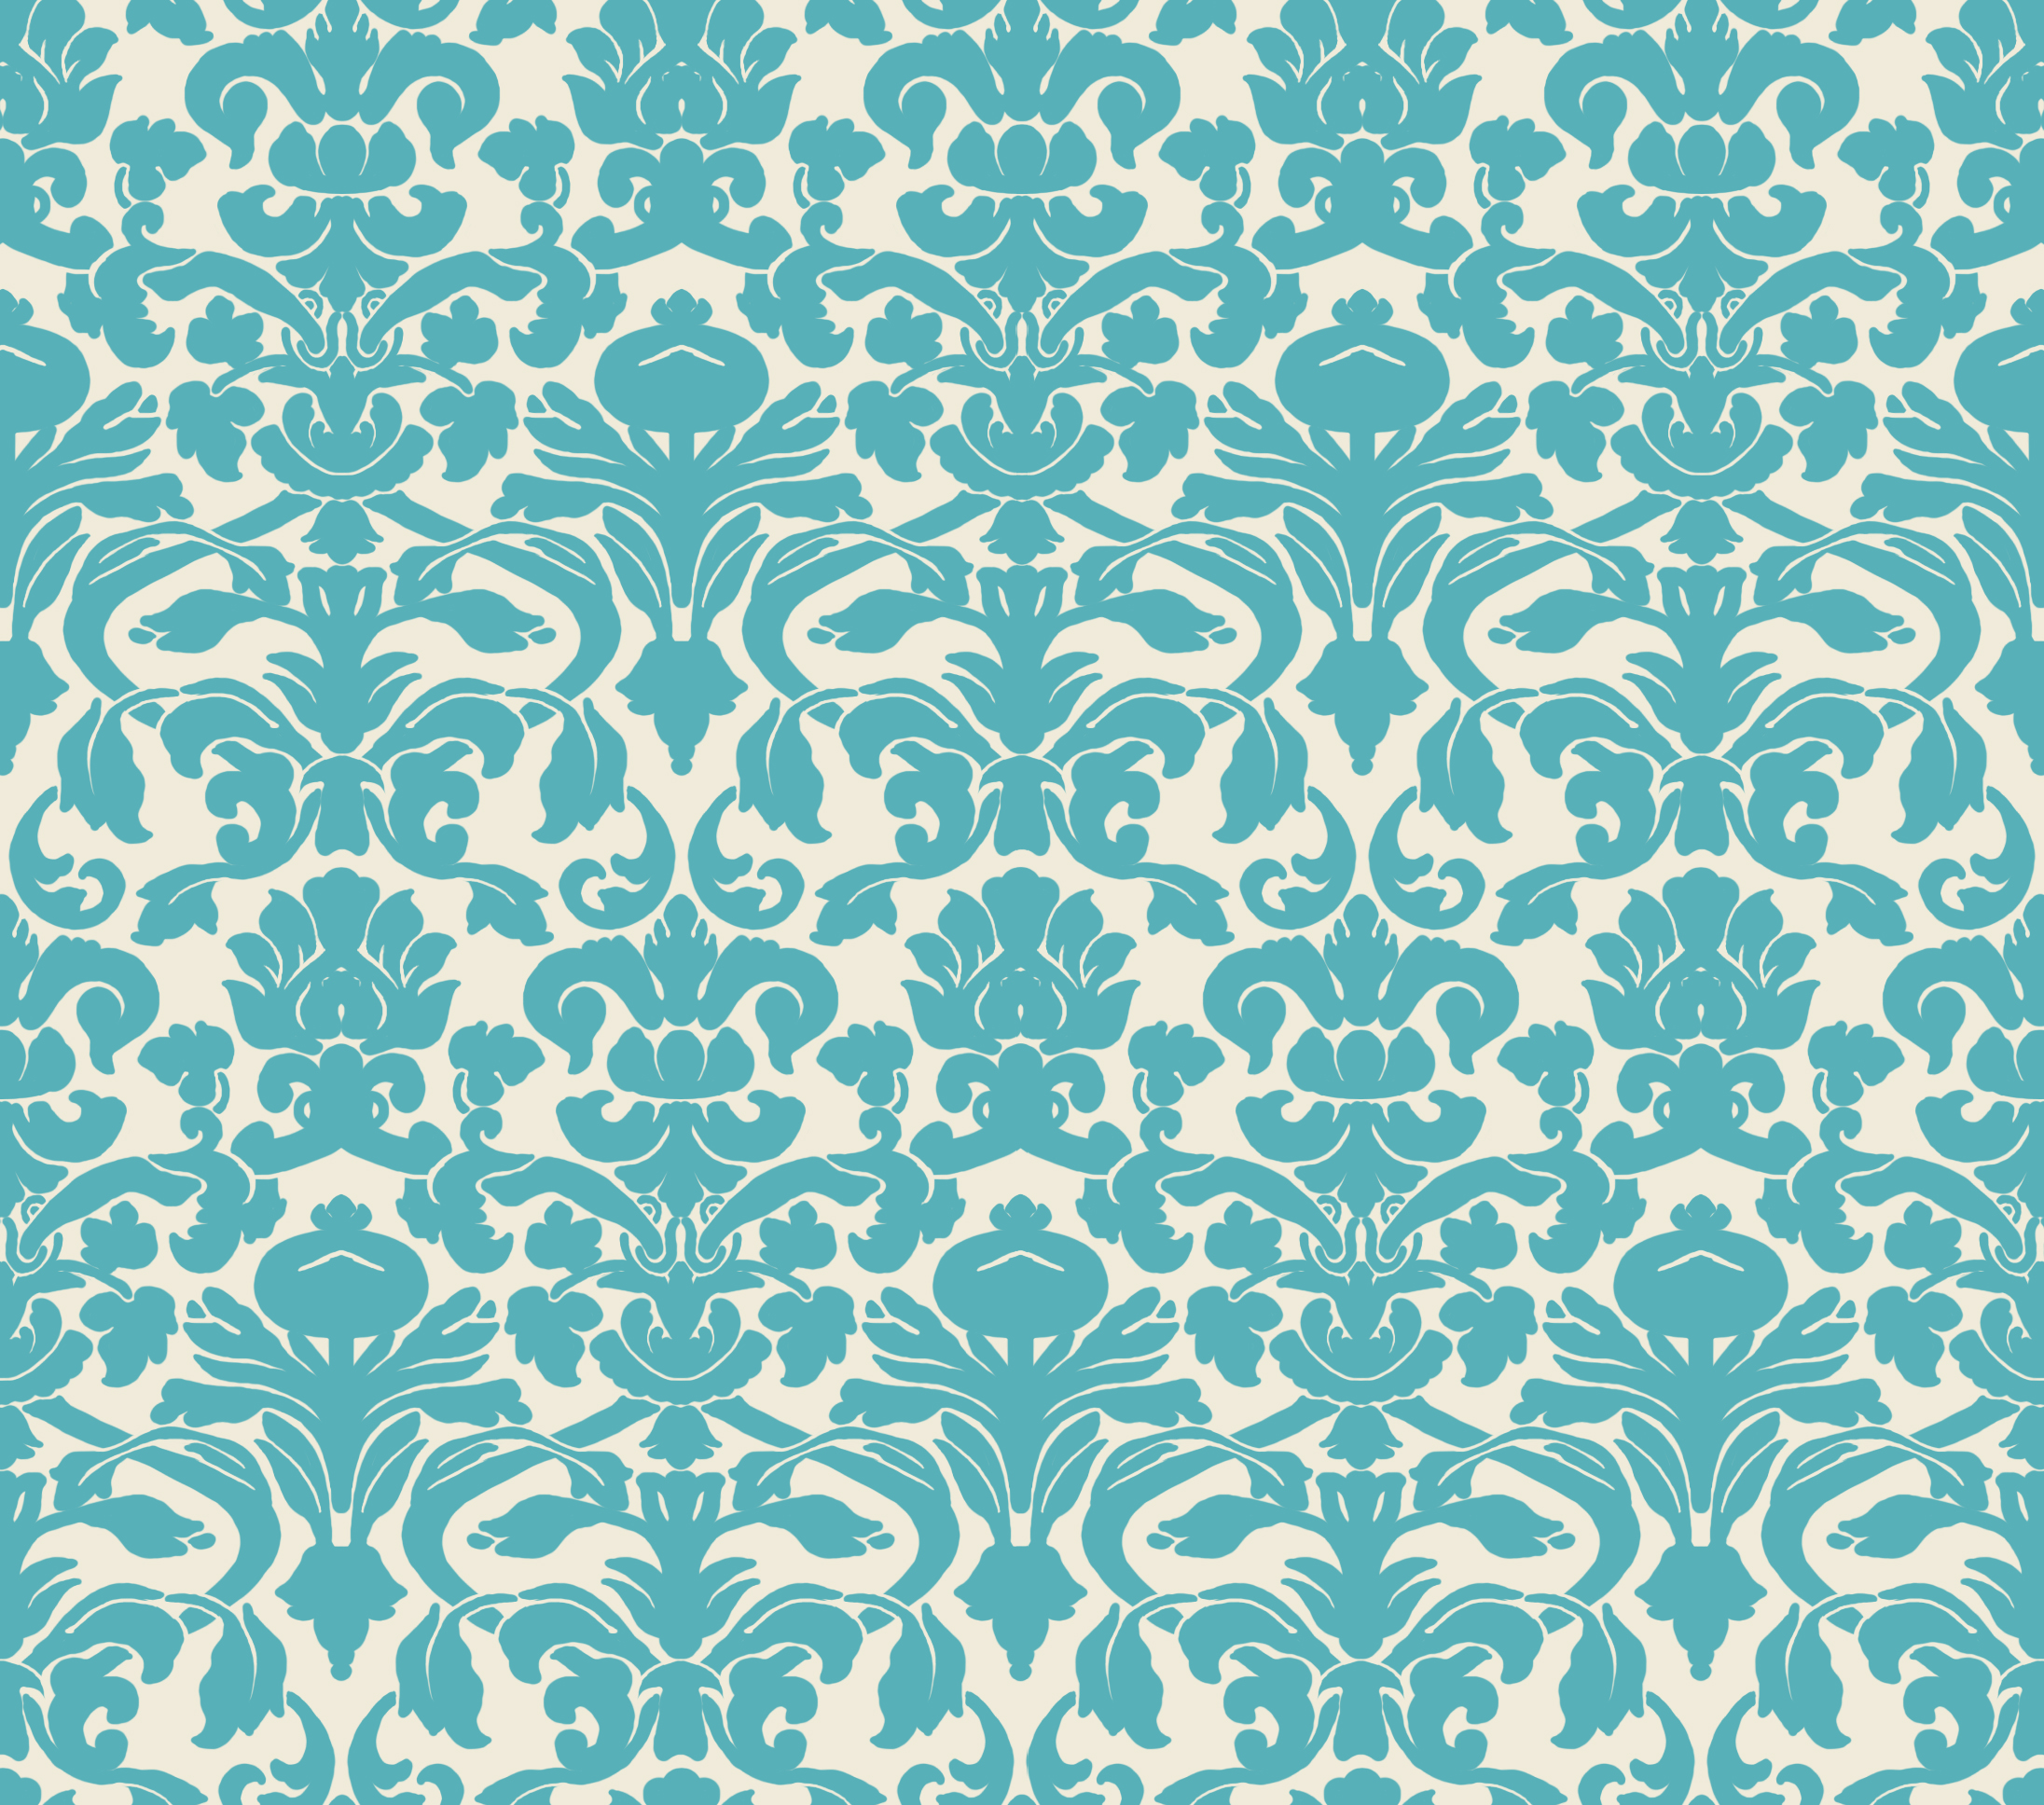  insurrectionx ornate wallpaper pattern edges match up pattern can